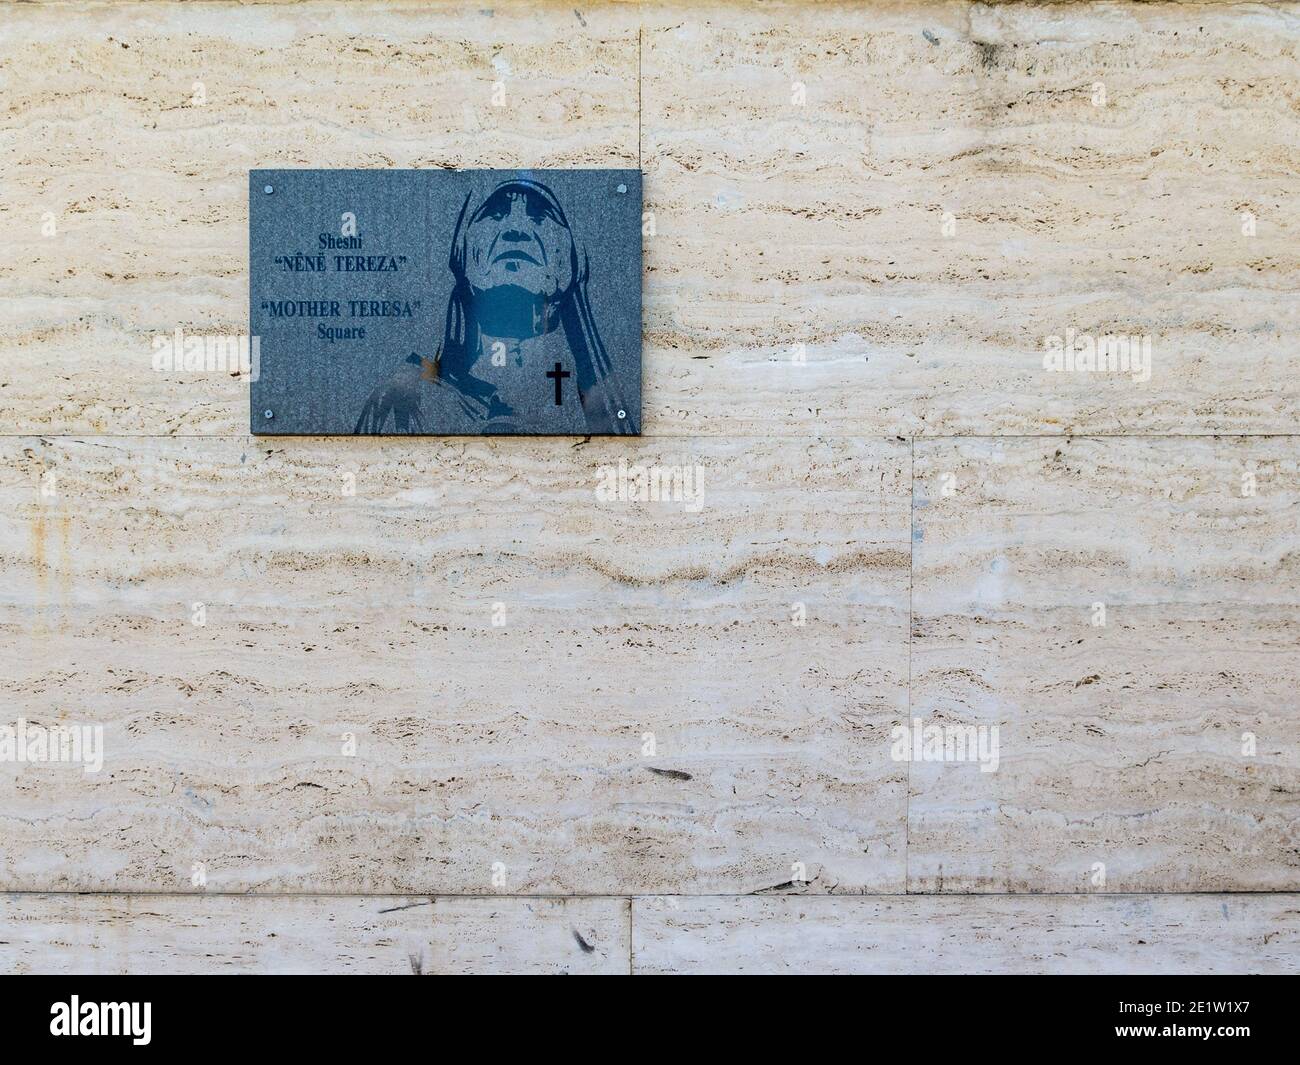 Memorial plaque of notable Albanian, Mother Teresa, in Mother Teresa Square, Tirana, Albania. Stock Photo